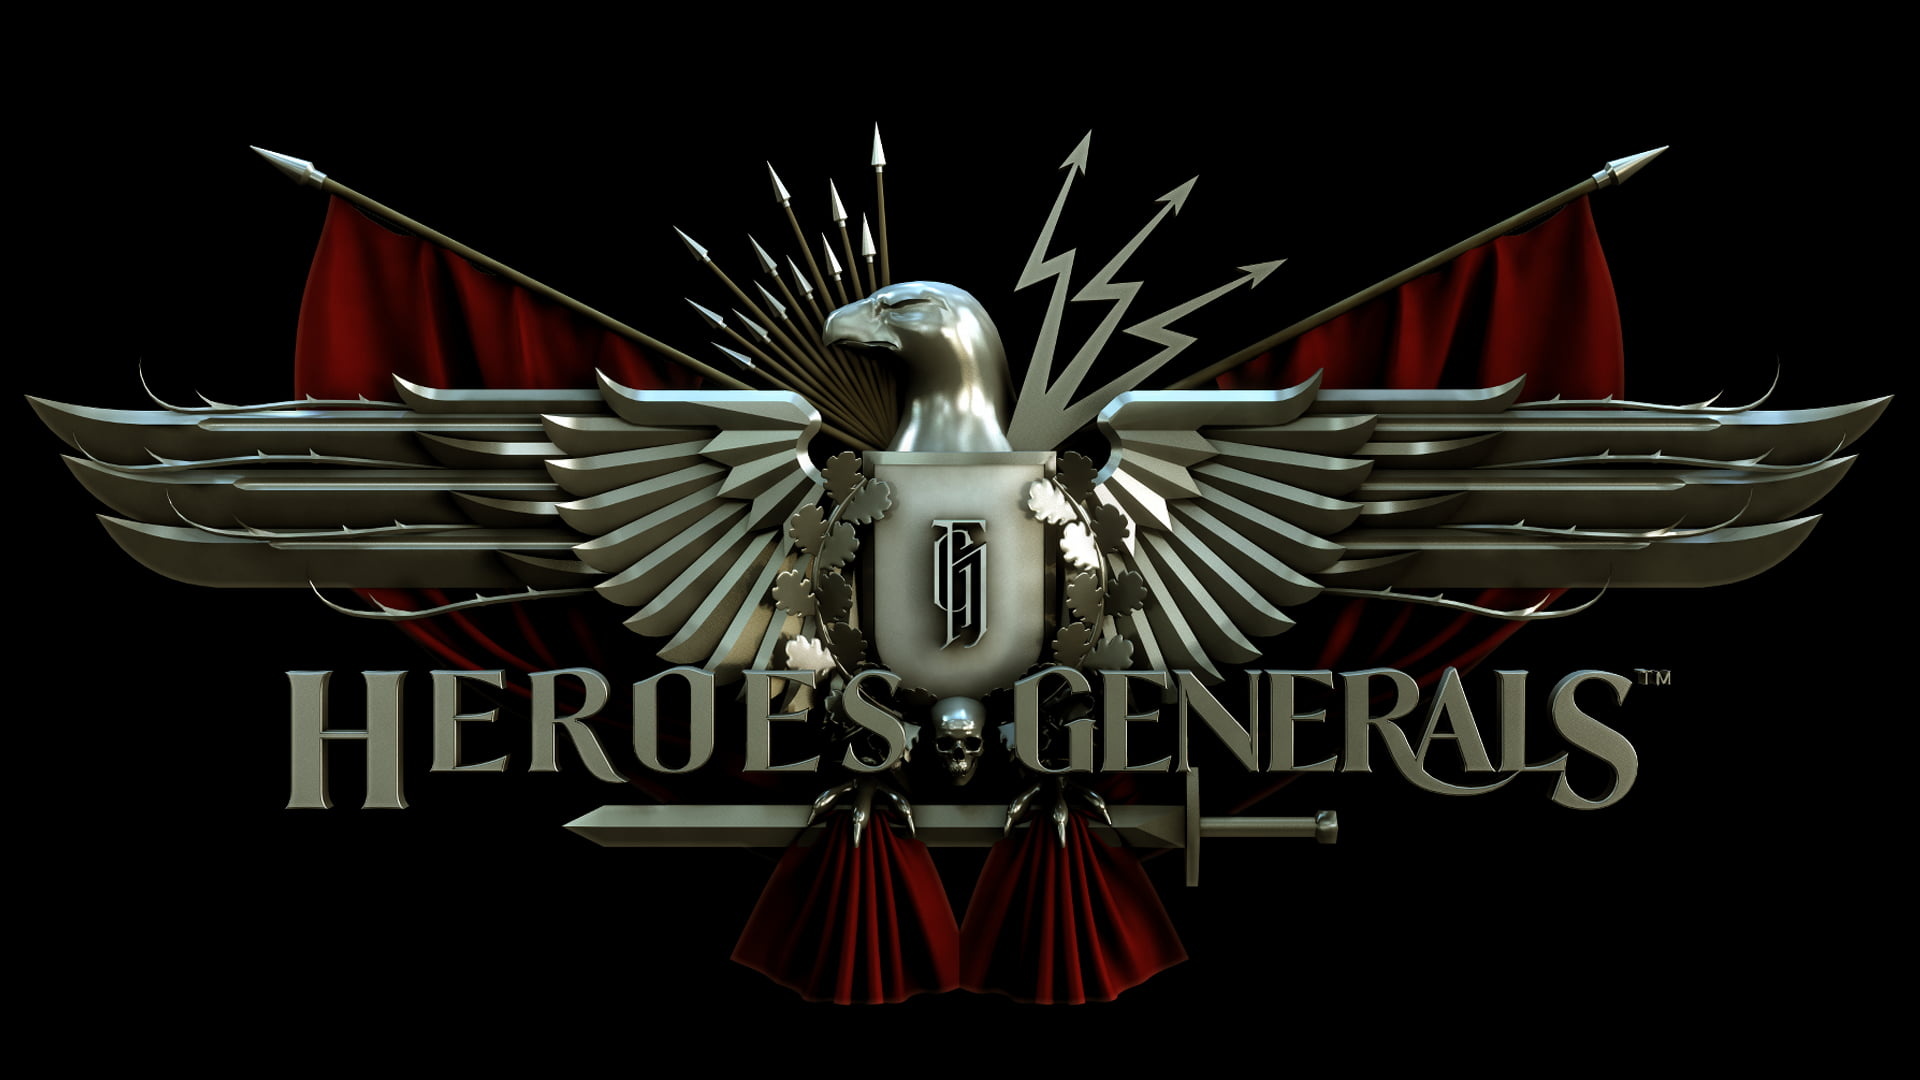 Heroes and Generals, Heroes and generals logo, Video games, 1920x1080 Full HD Desktop